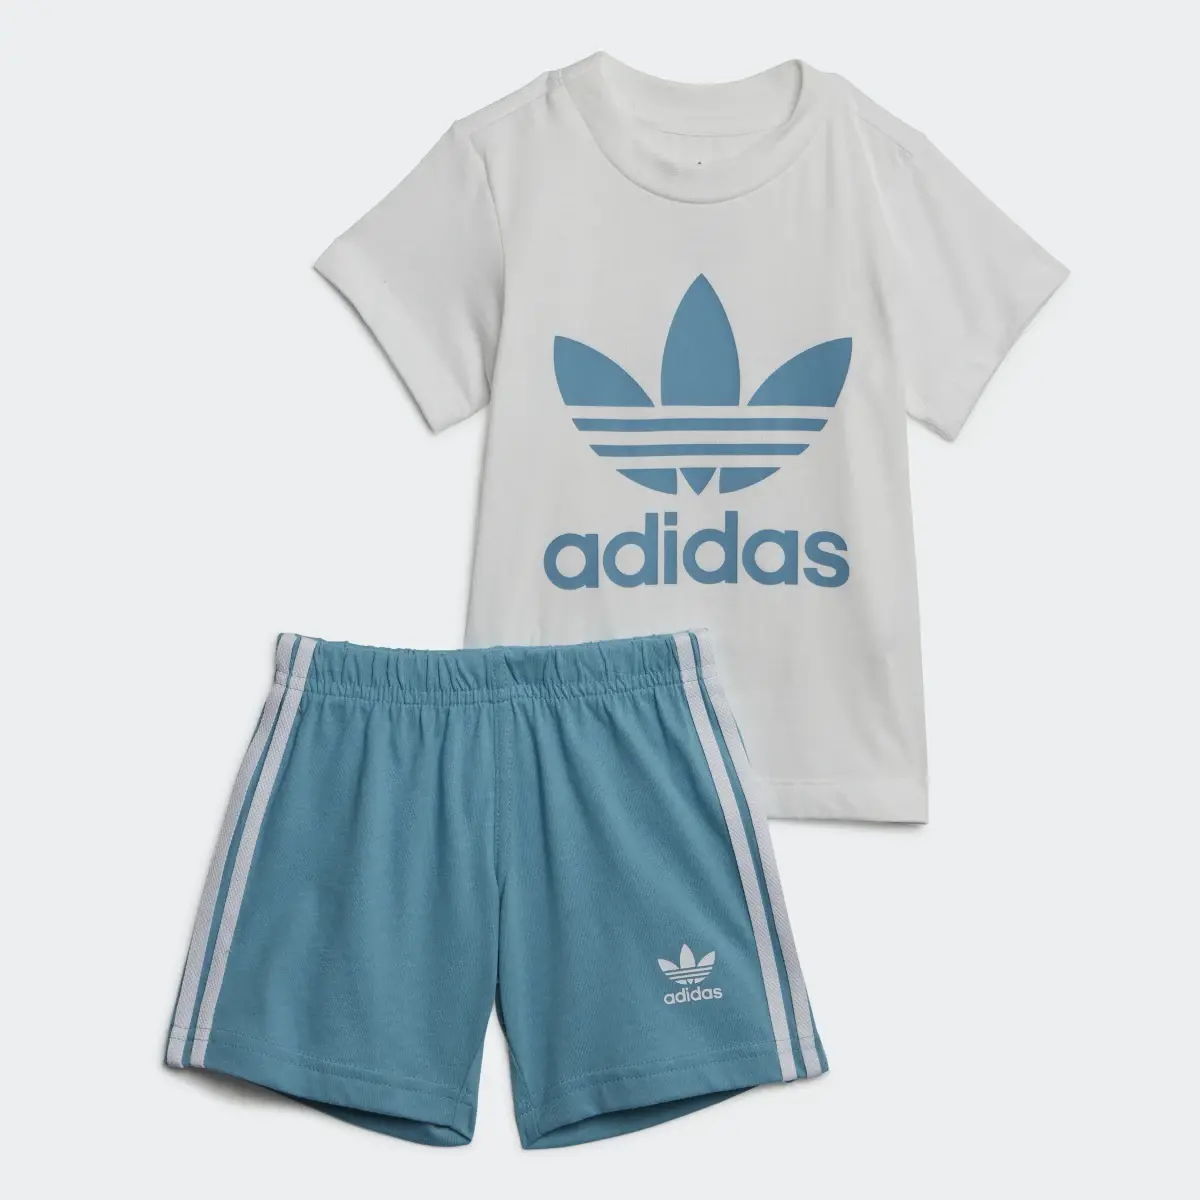 Adidas Trefoil Shorts Tee Set. 2